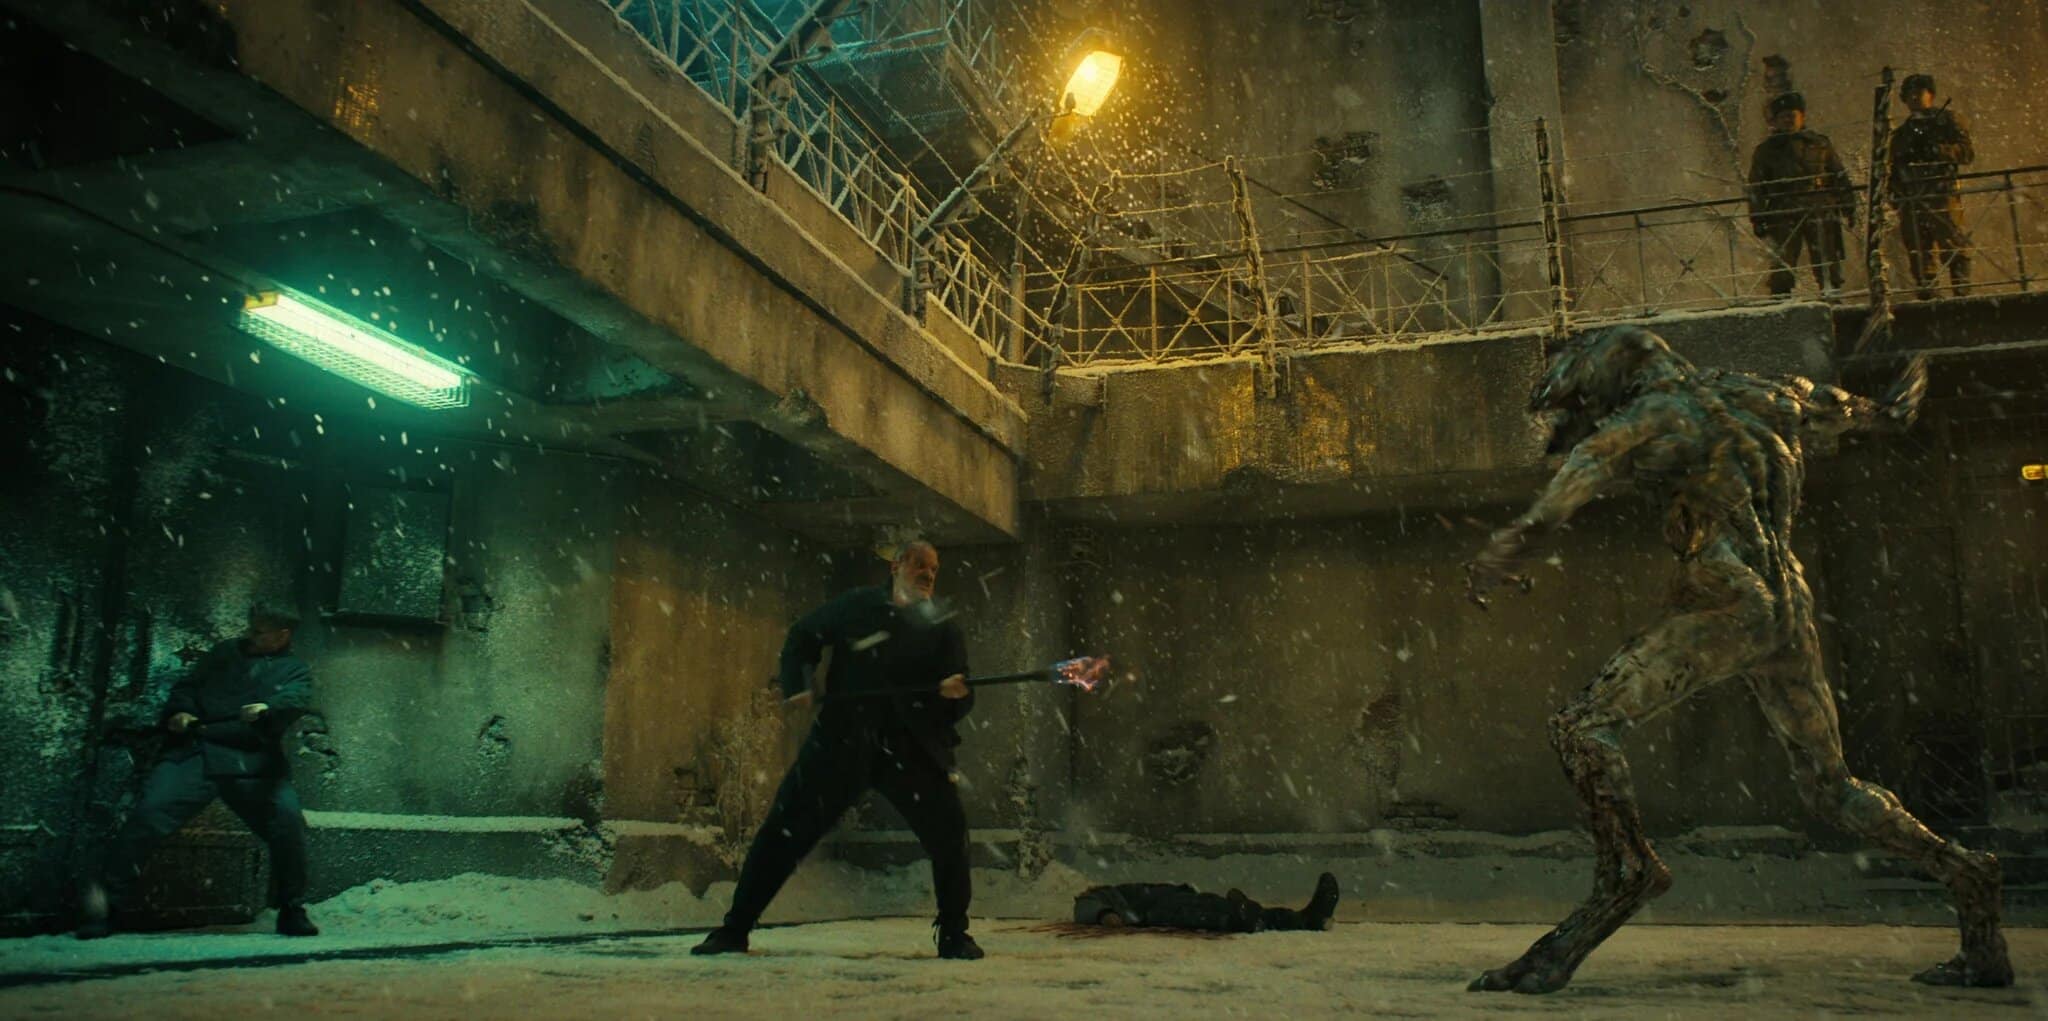 Hopper fights a demogorgan in stranger things season 4